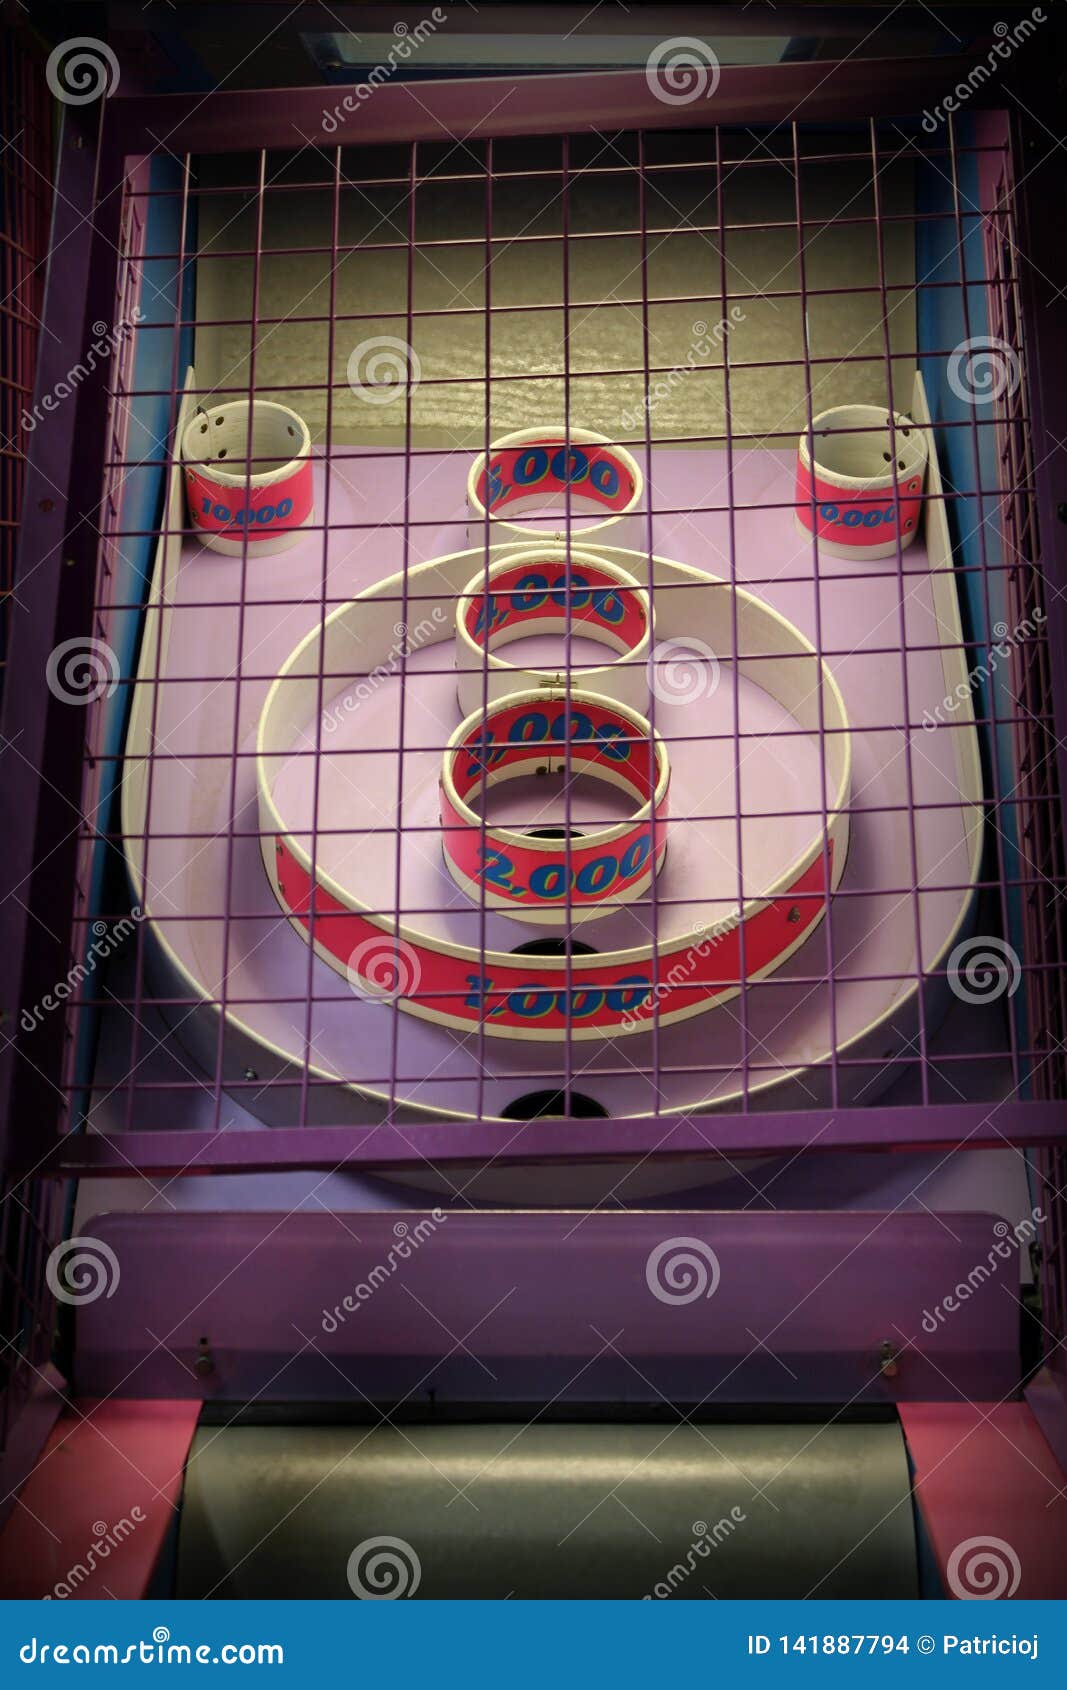 Skee Ball Arcade Bowling Game Stock Photo